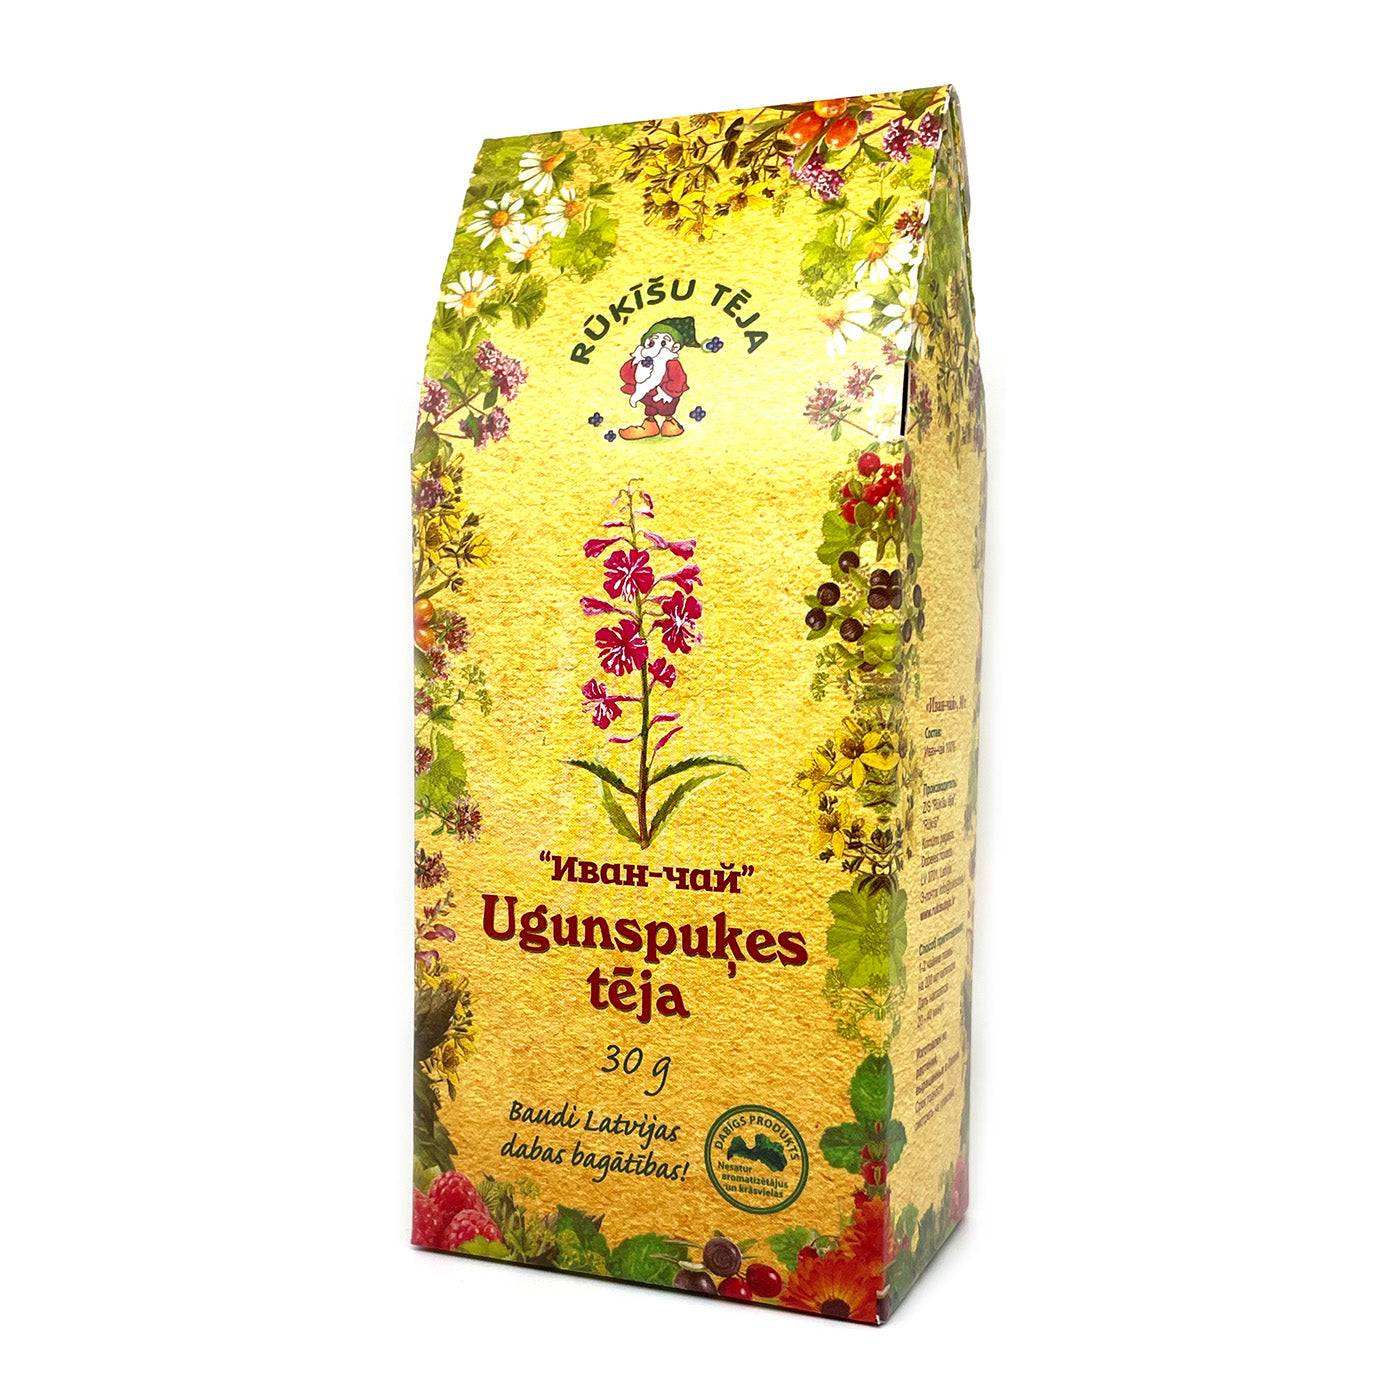 Fireweed Tea, 30 g